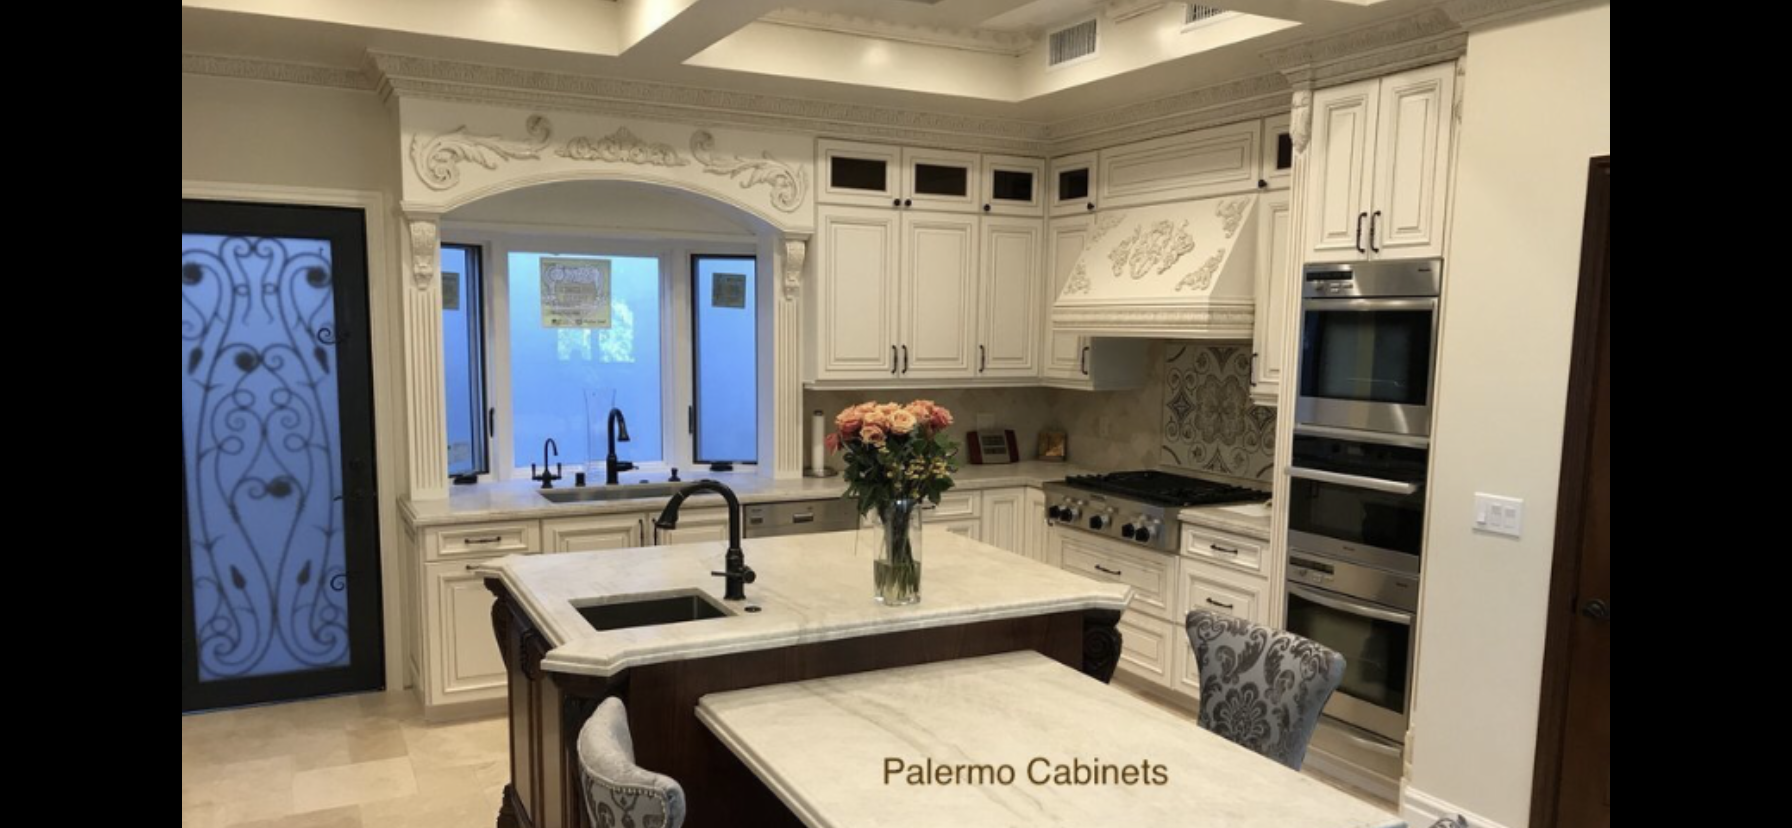 Palermo Cabinets